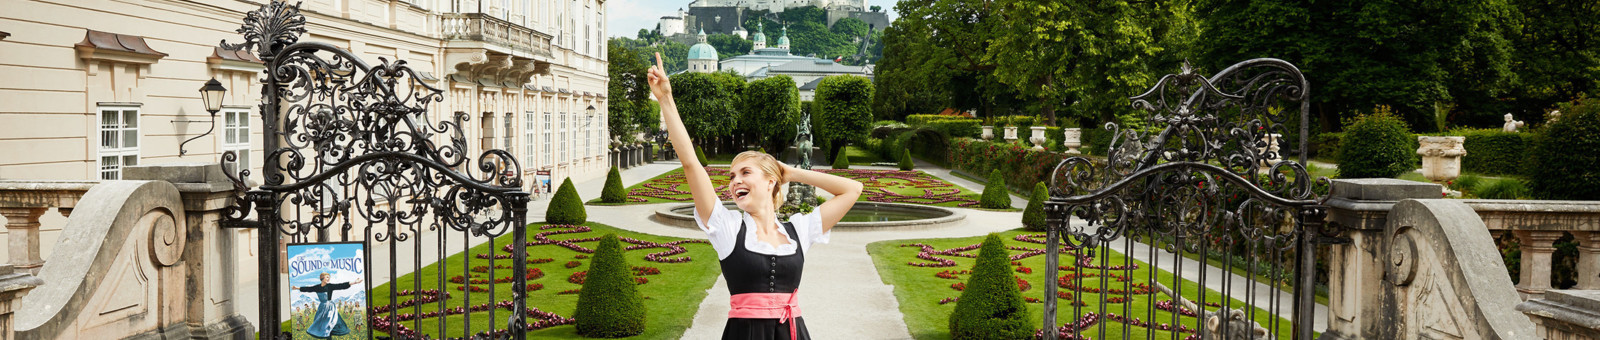     Sound of Music actress at Mirabell Gardens in Salzburg 